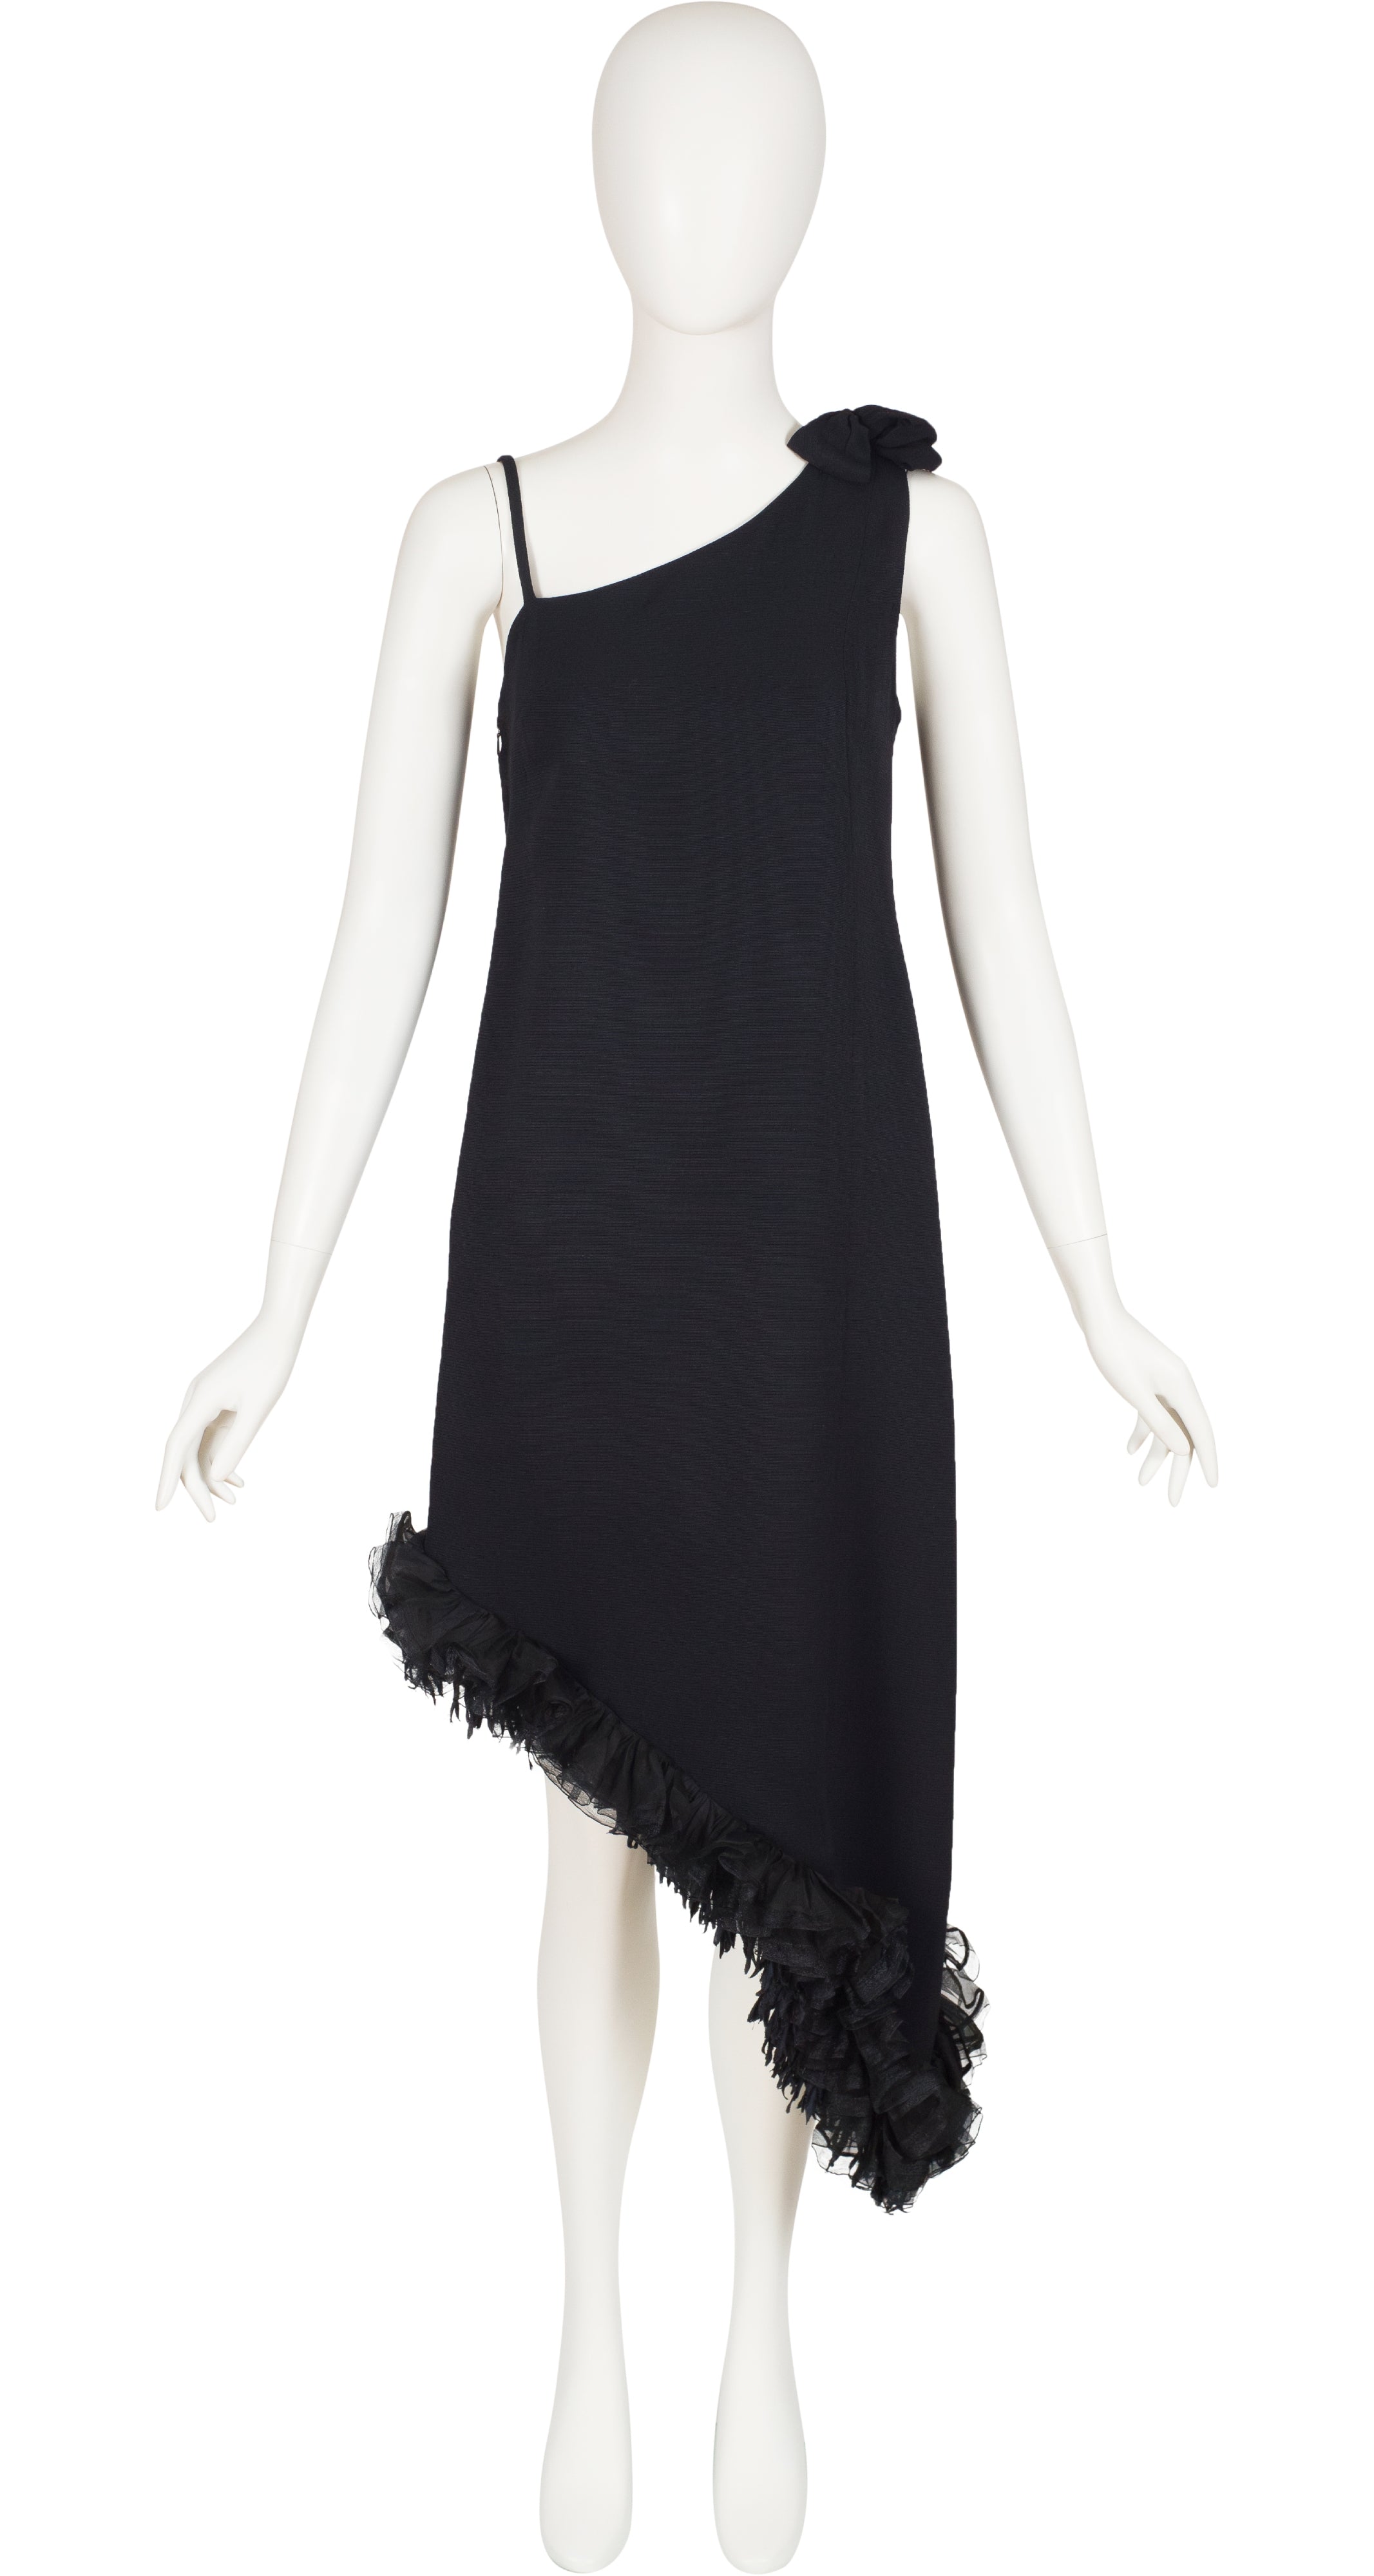 1960s Asymmetrical Black Crepe One-Shoulder Evening Dress